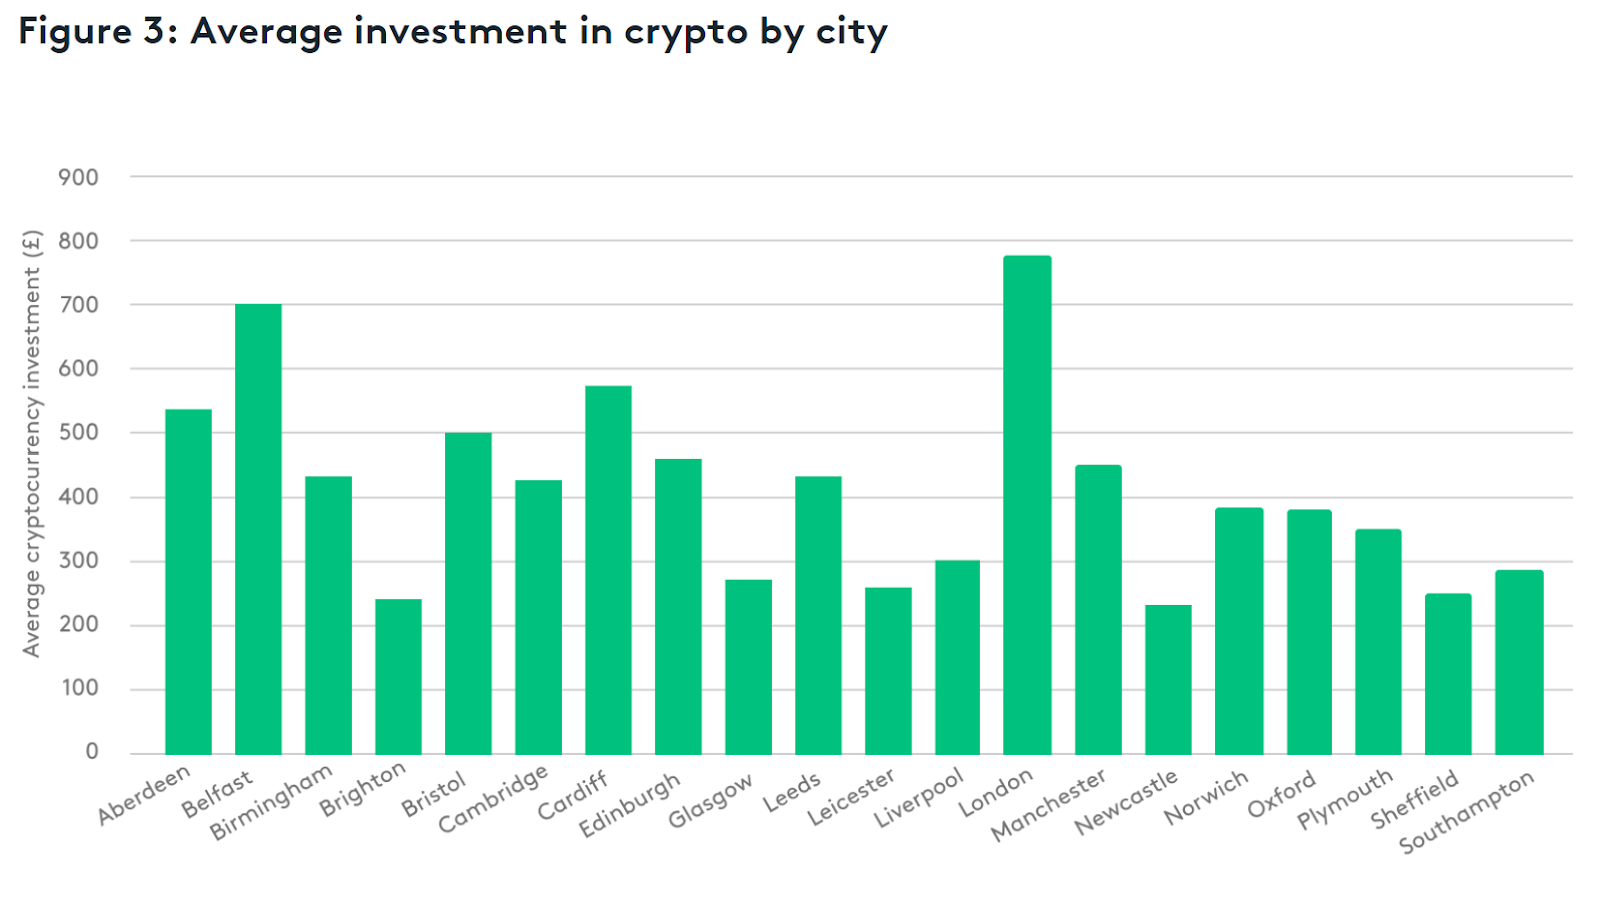 London Belfast the top UK crypto cities Newcastle last